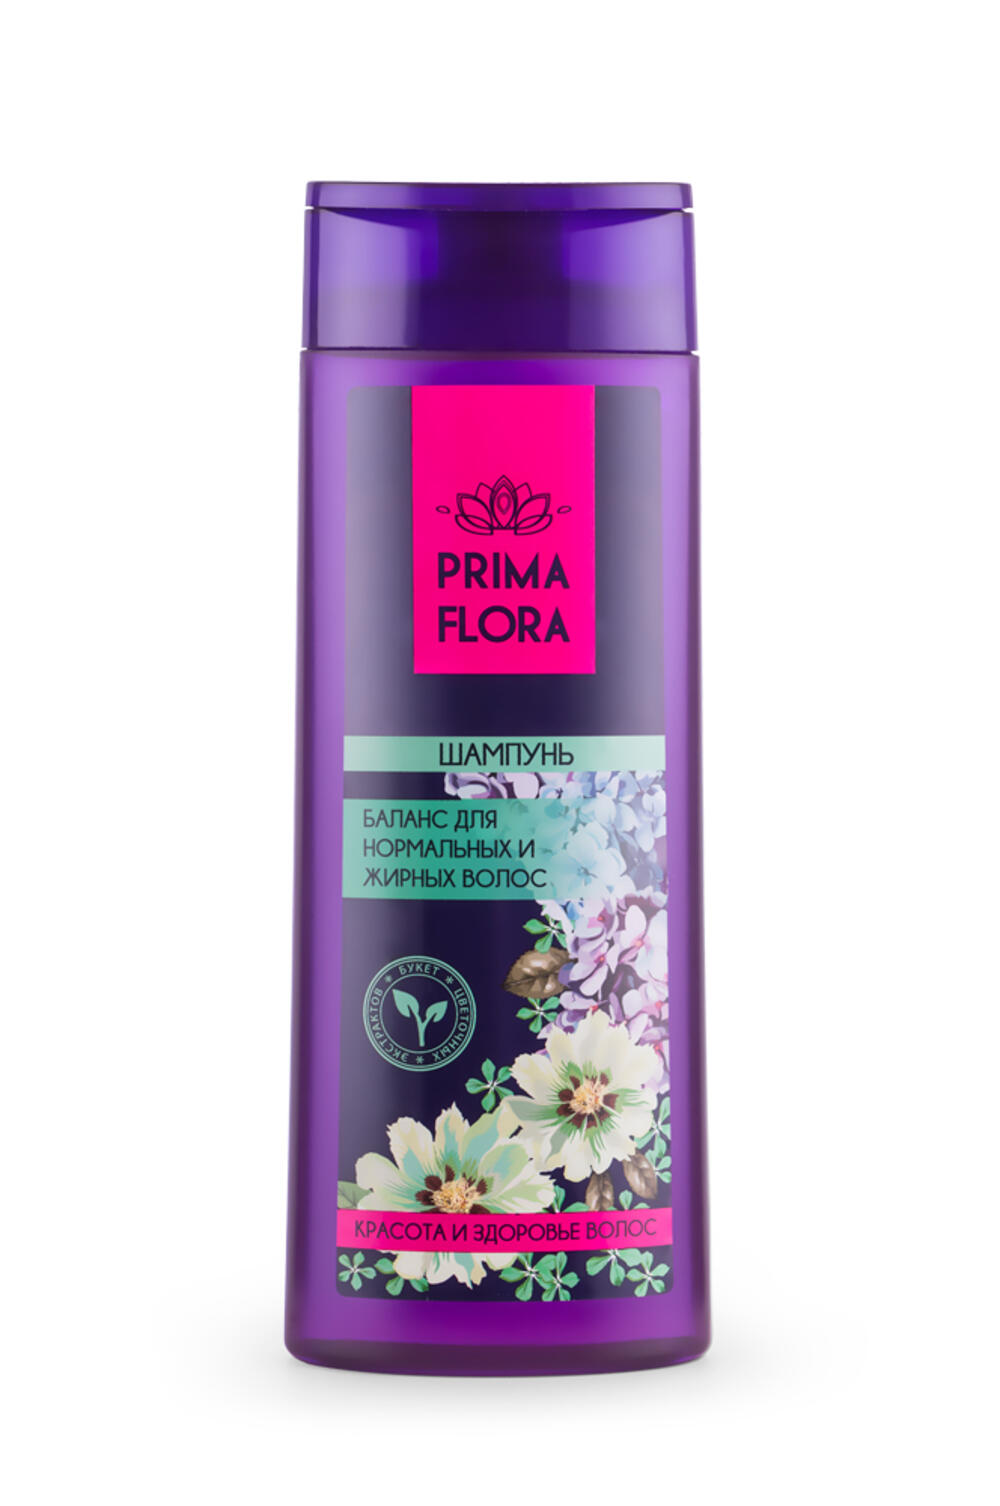 Prima flora šampon